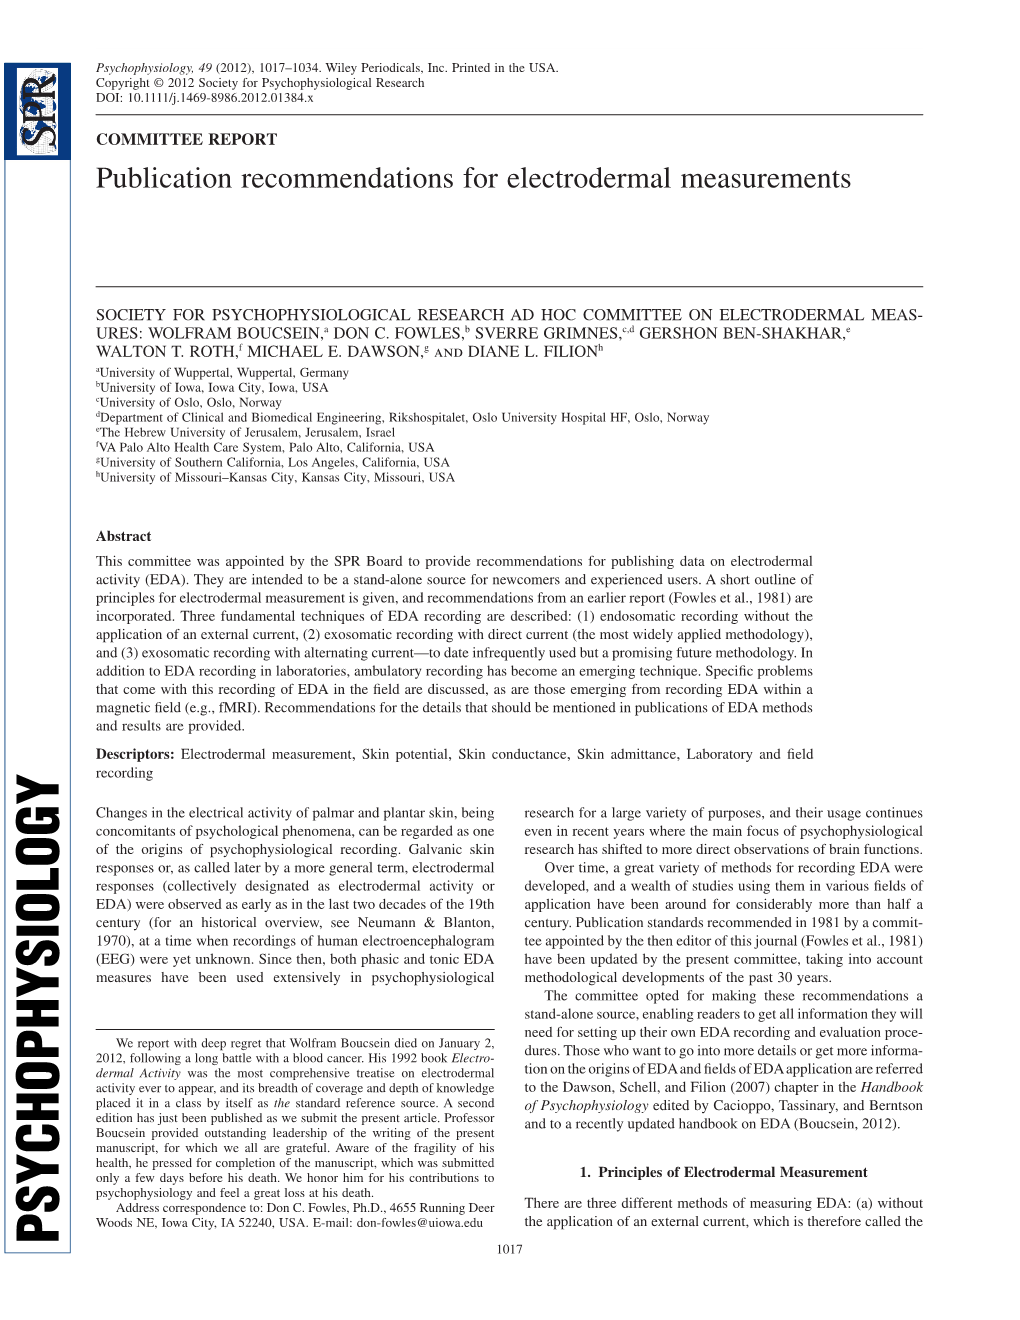 Publication Recommendations for Electrodermal Measurements